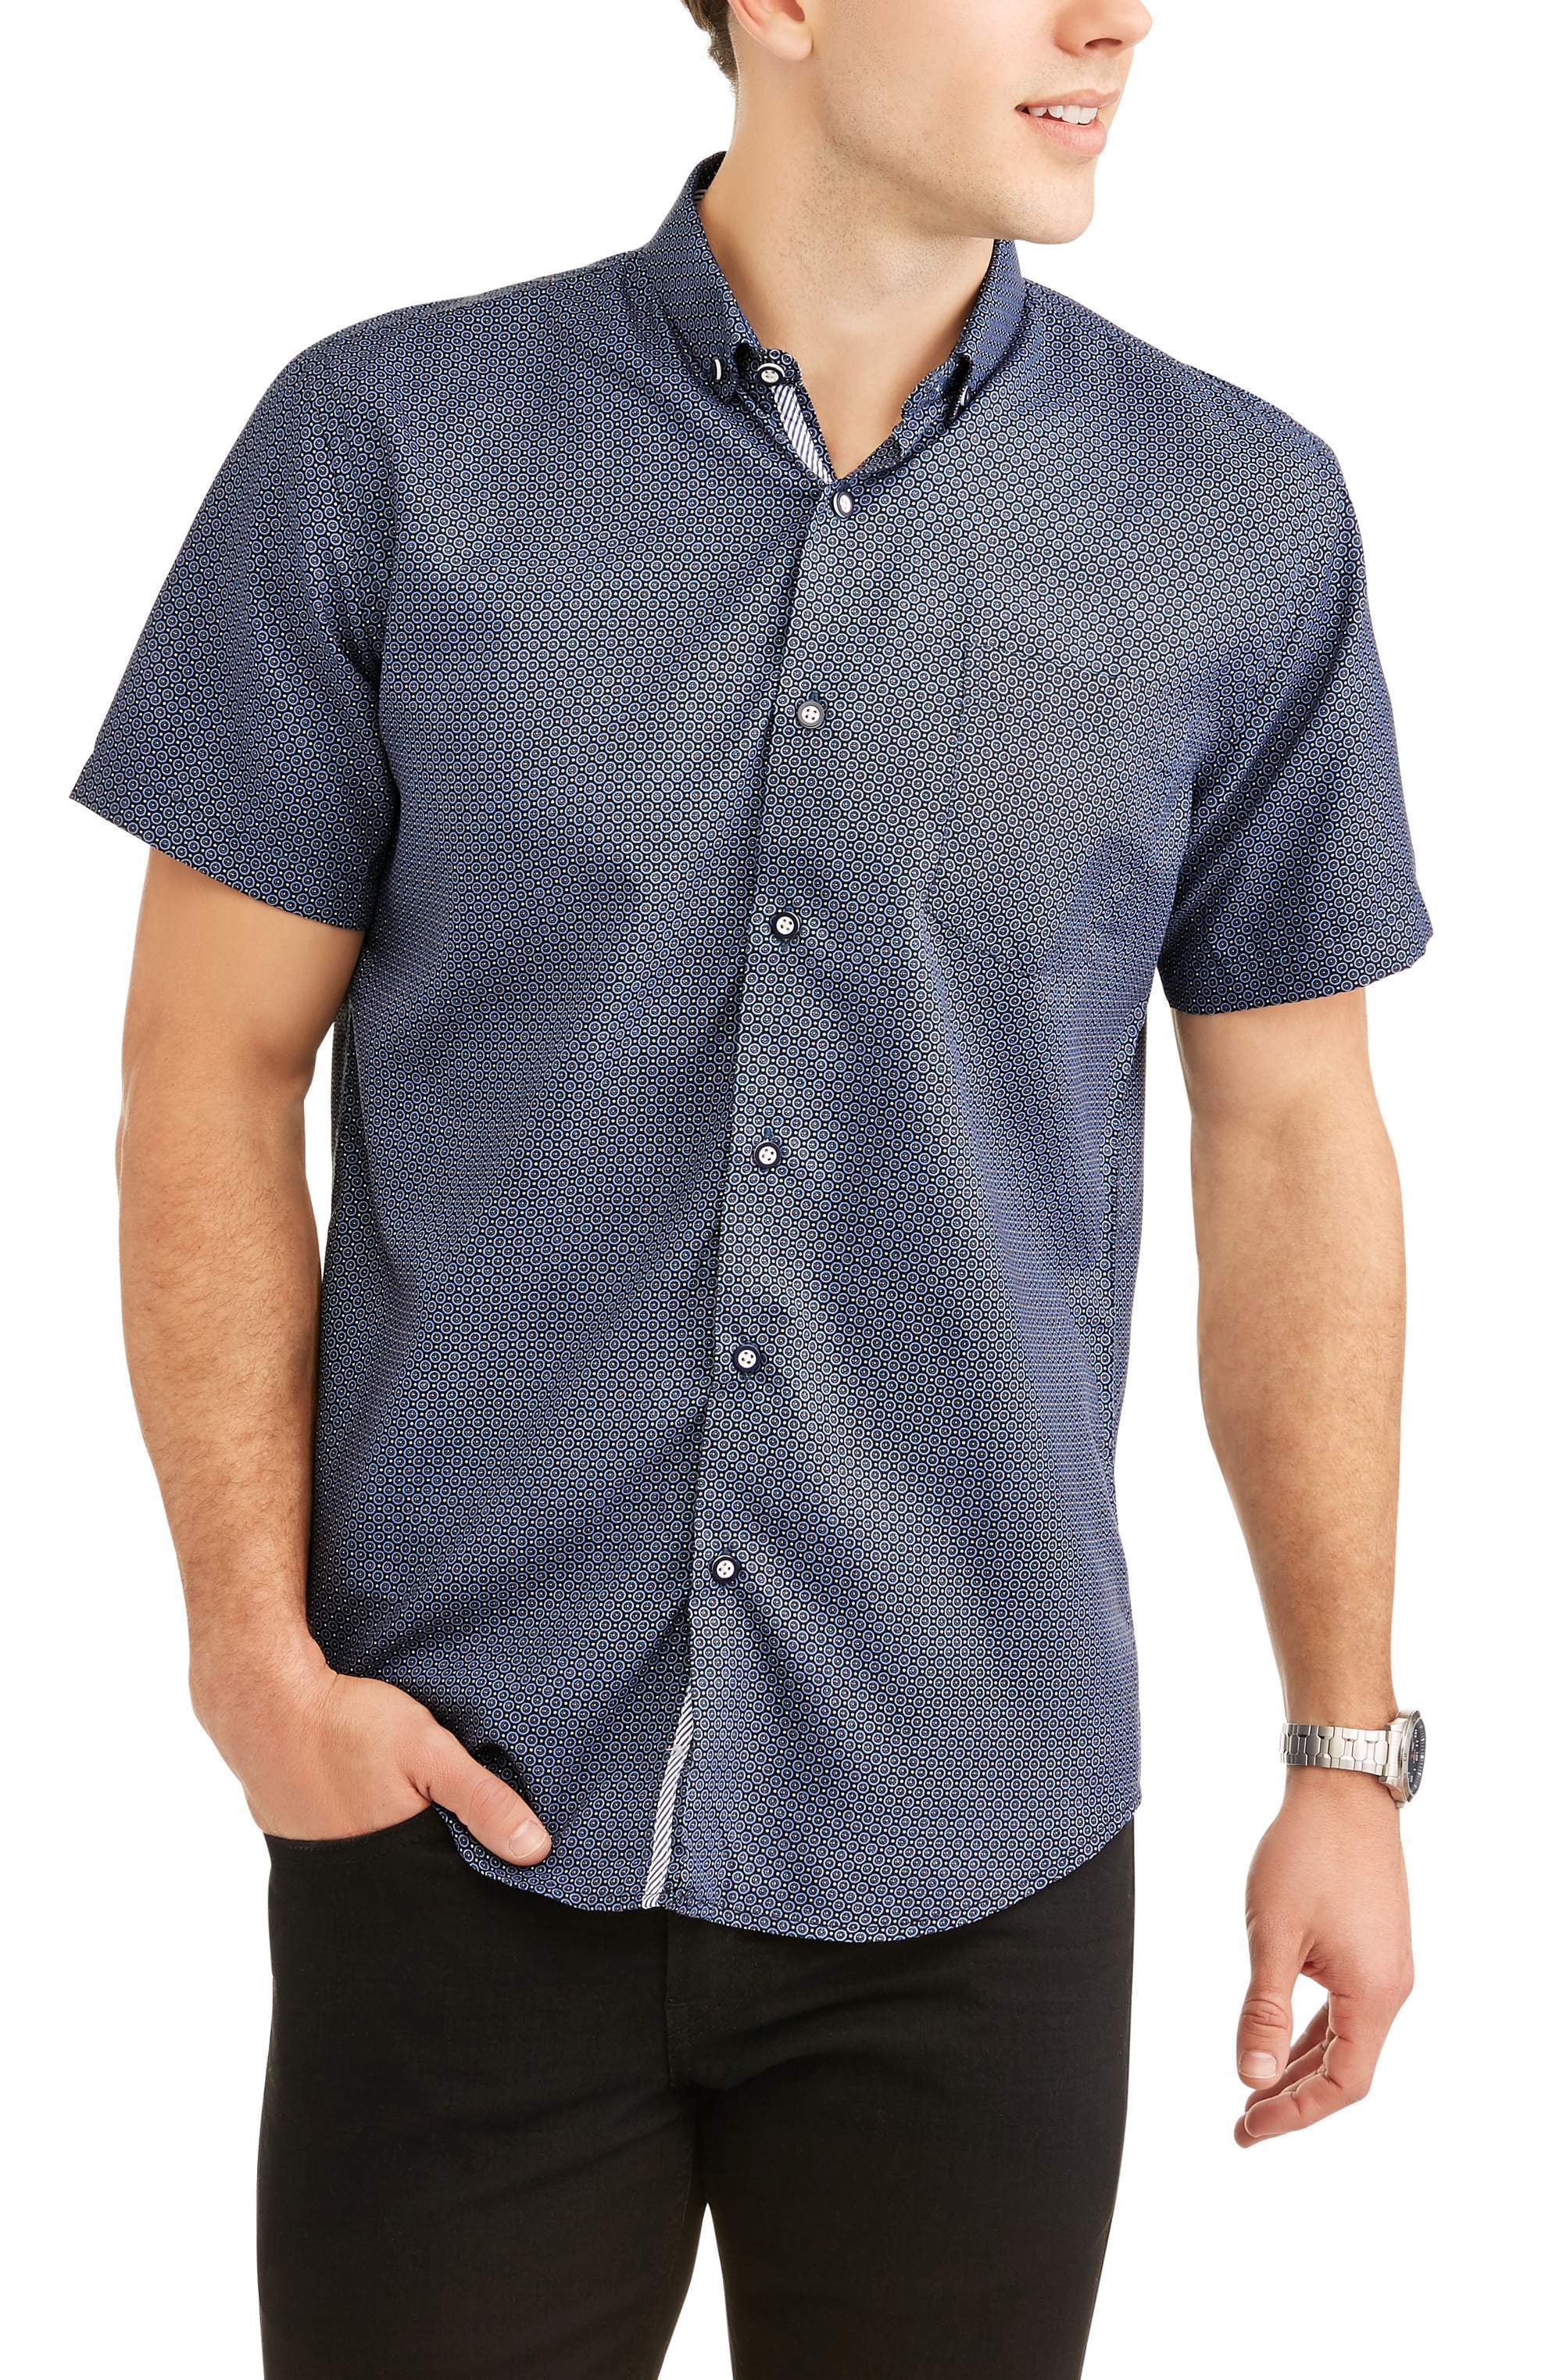 Interaffair Men's Printed Microfiber Woven Short Sleeve Shirt - Walmart.com